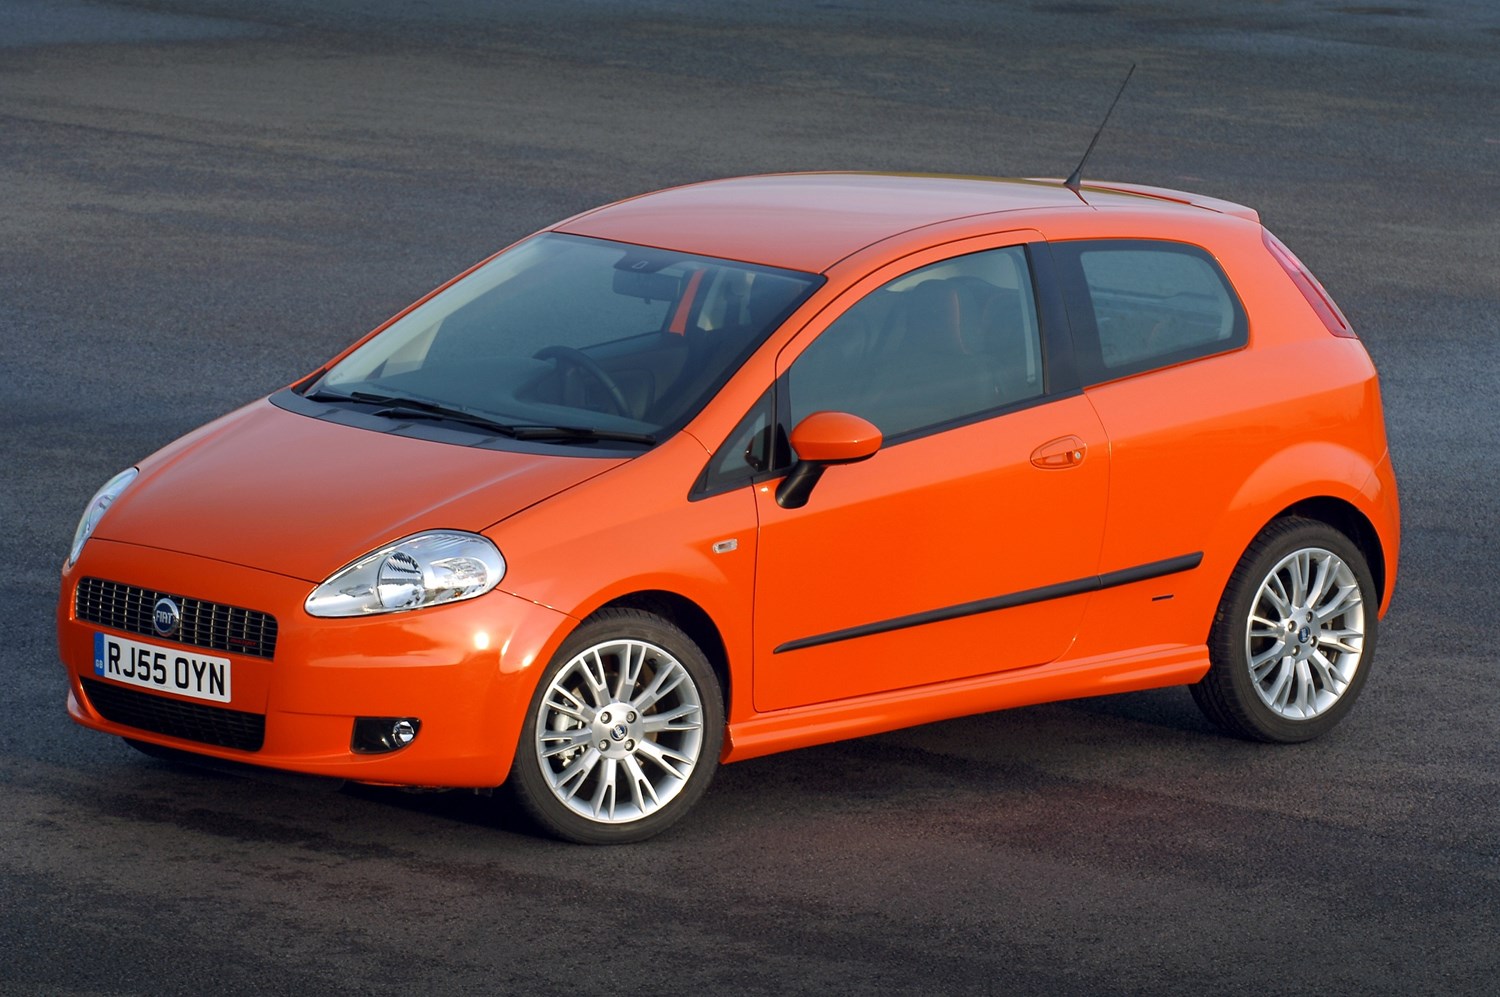 Fiat Grande Punto (2006 - 2010) used car review, Car review